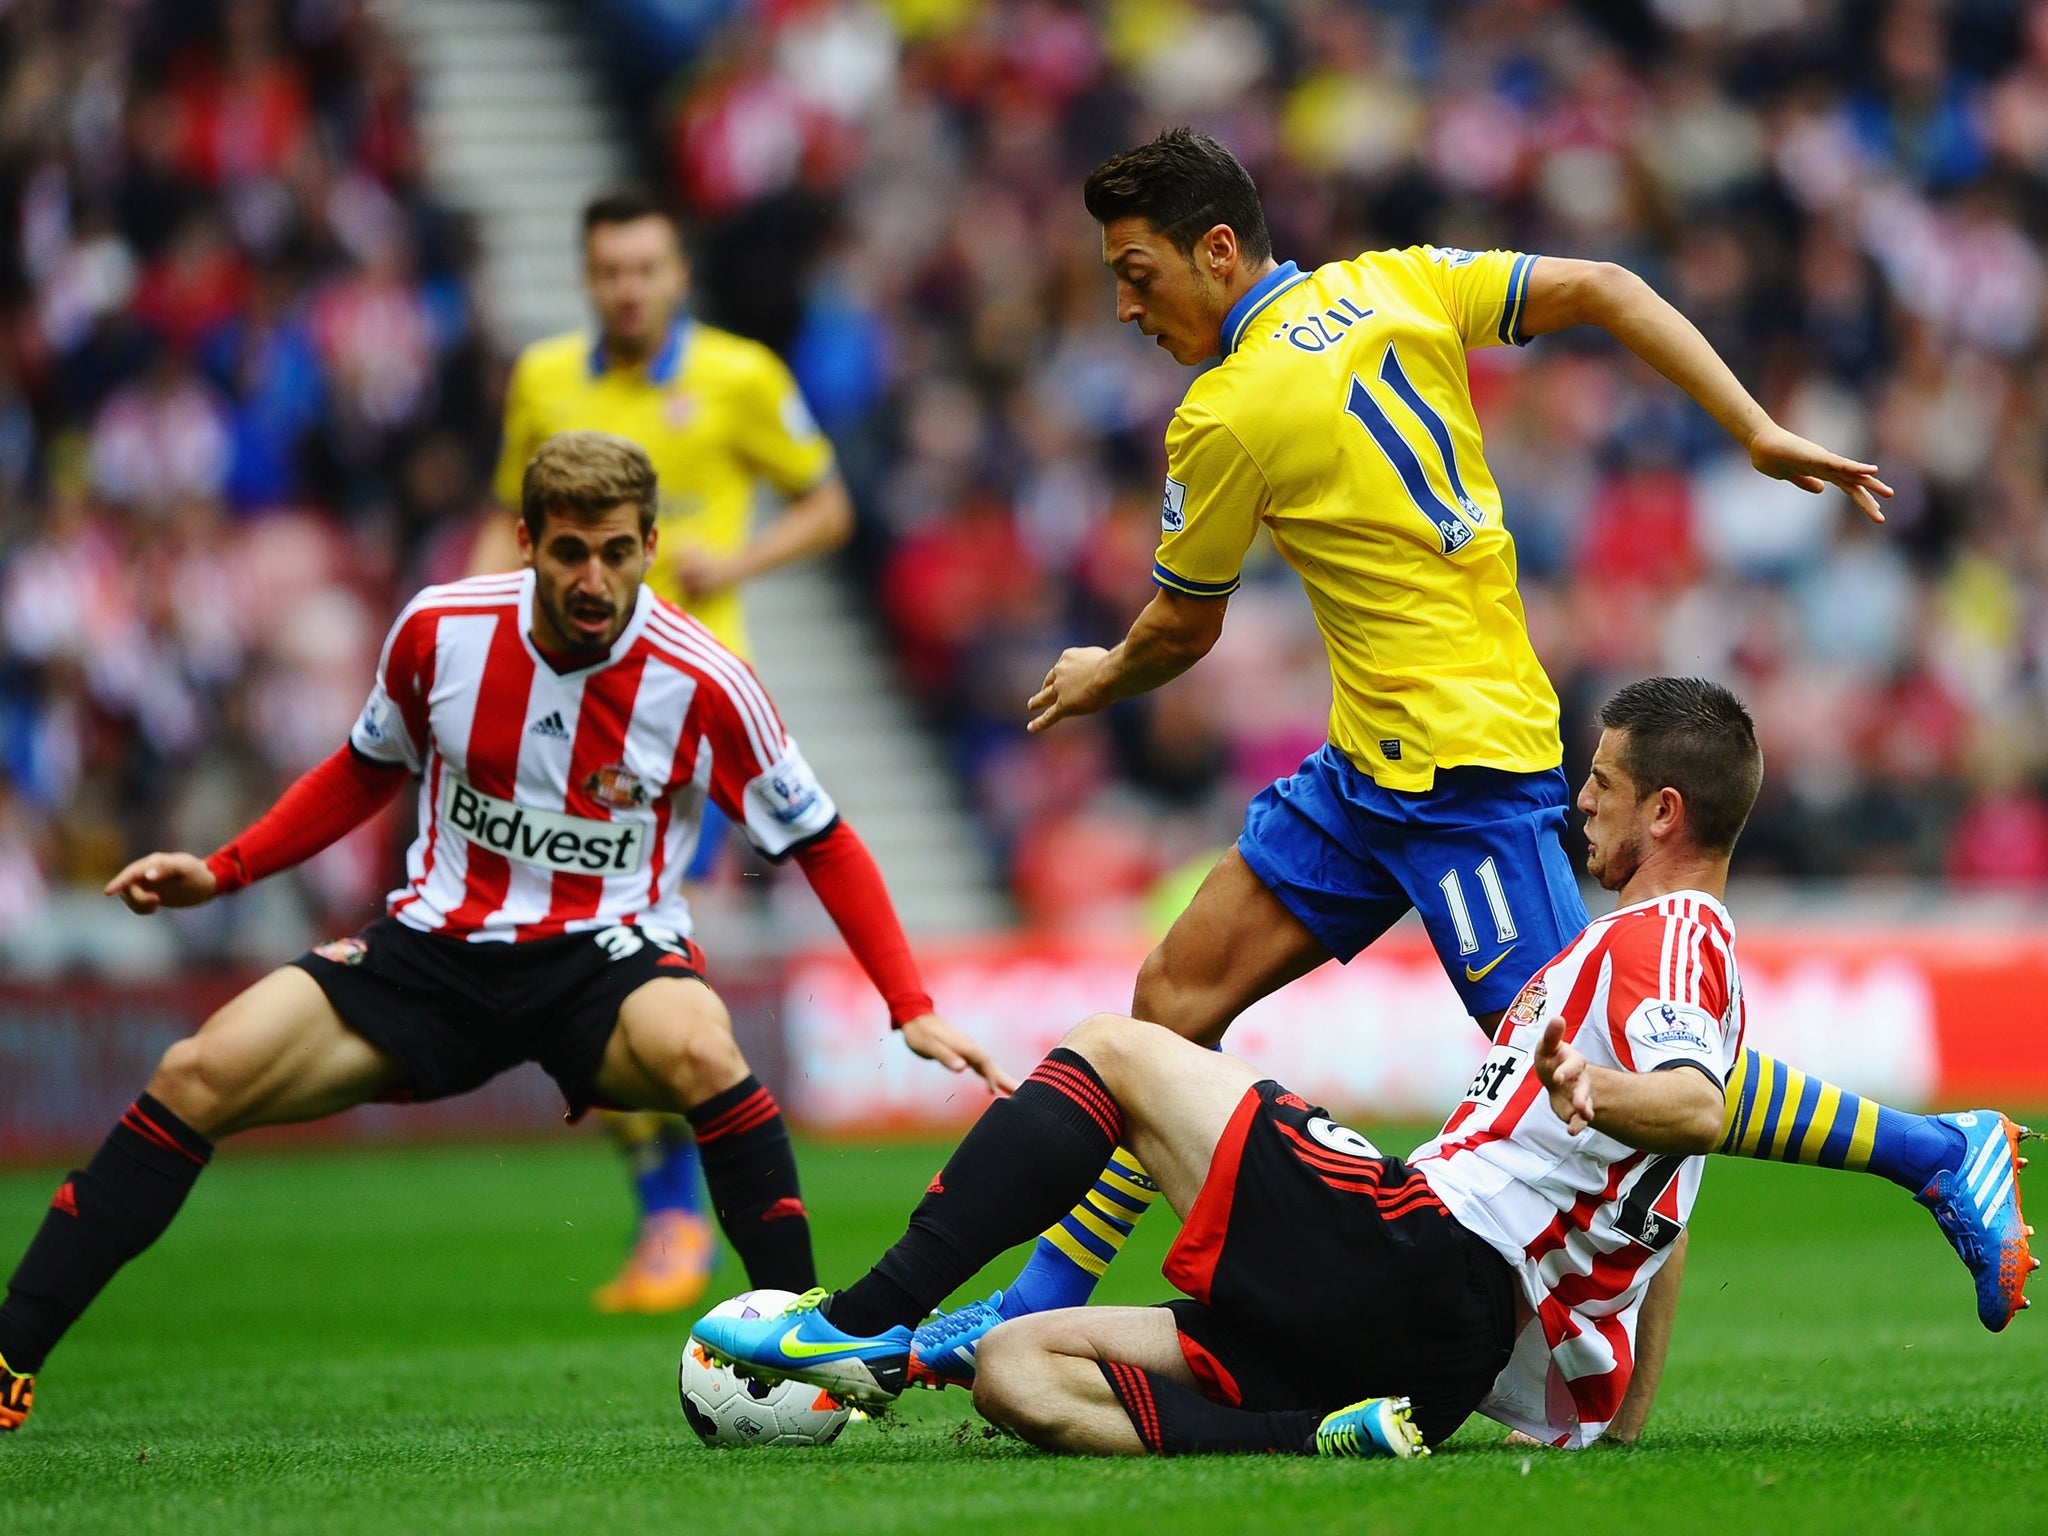 Mesut Ozil dribbles through the Sunderland defence